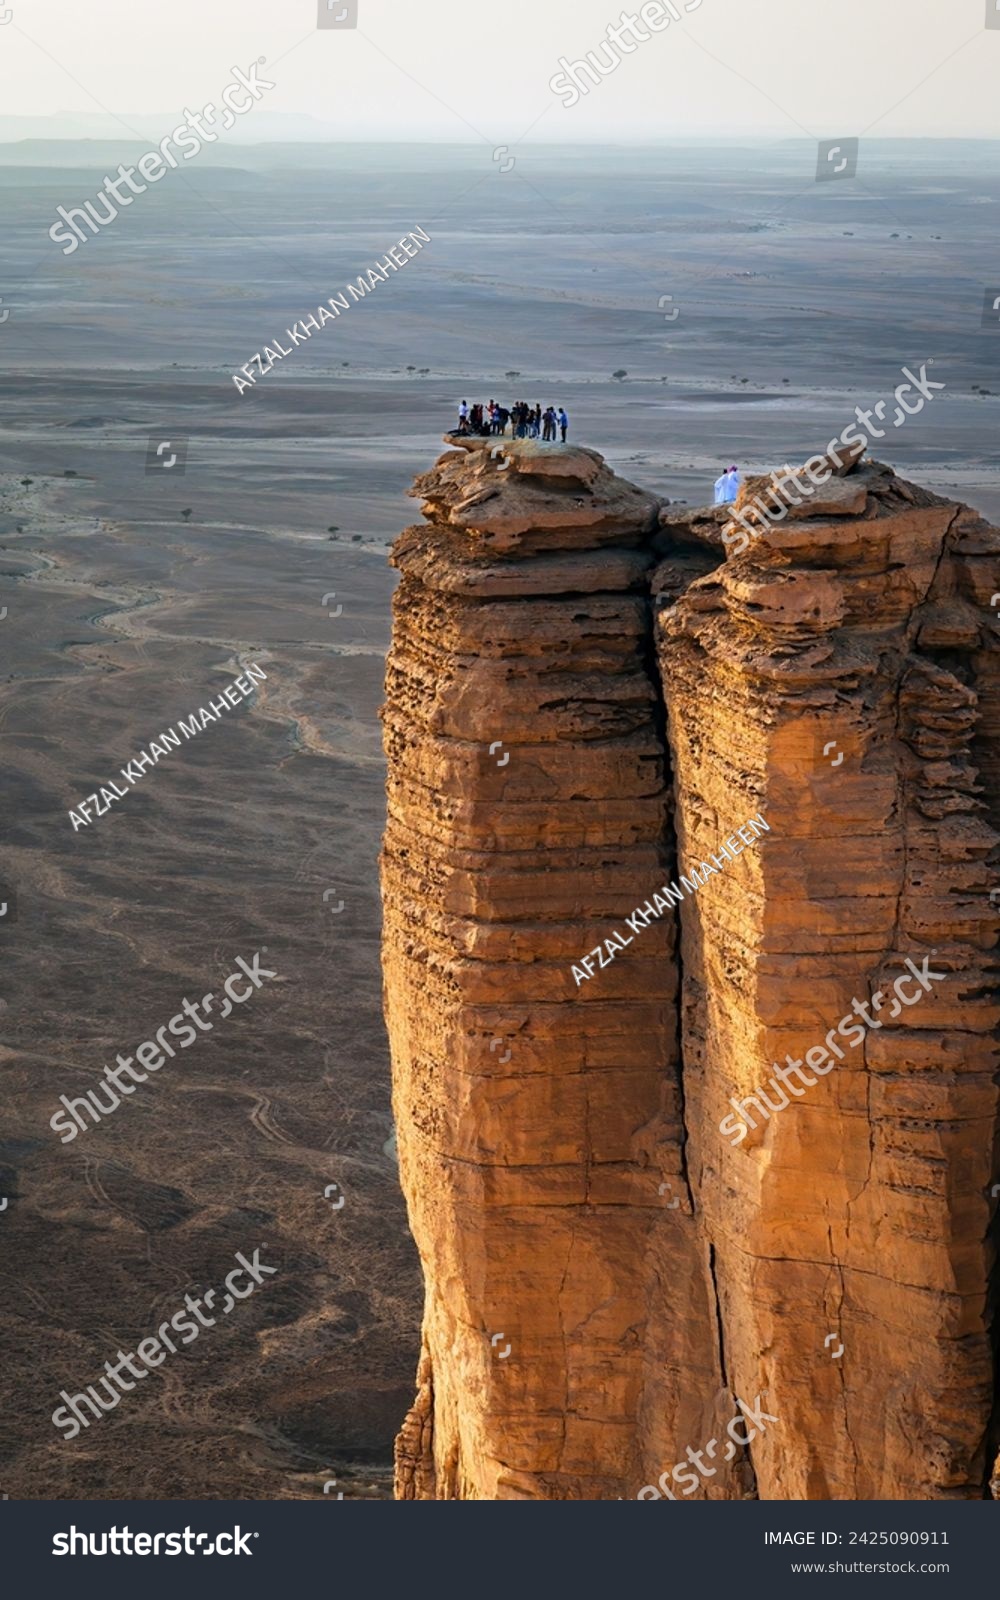 Edge of the World, a natural landmark and popular tourist destination near Riyadh -Saudi Arabia. #2425090911